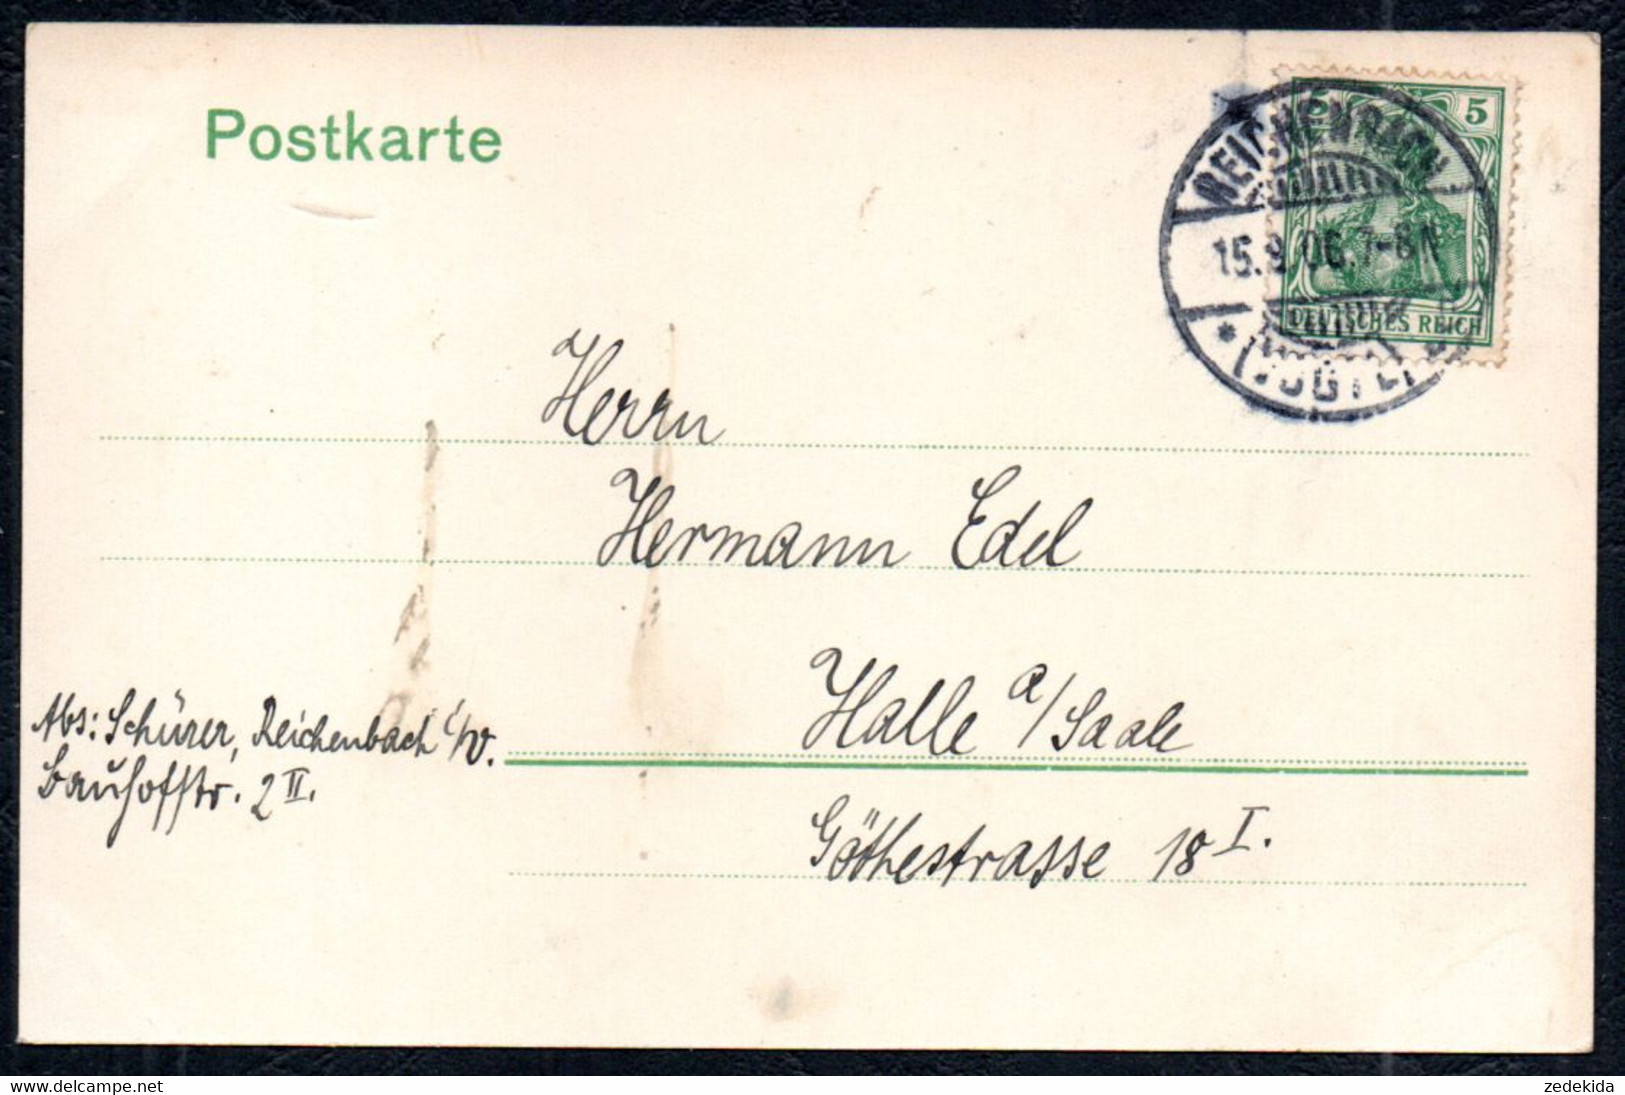 C4910 - Reichenbach - Realschule Schule - Reichenbach I. Vogtl.